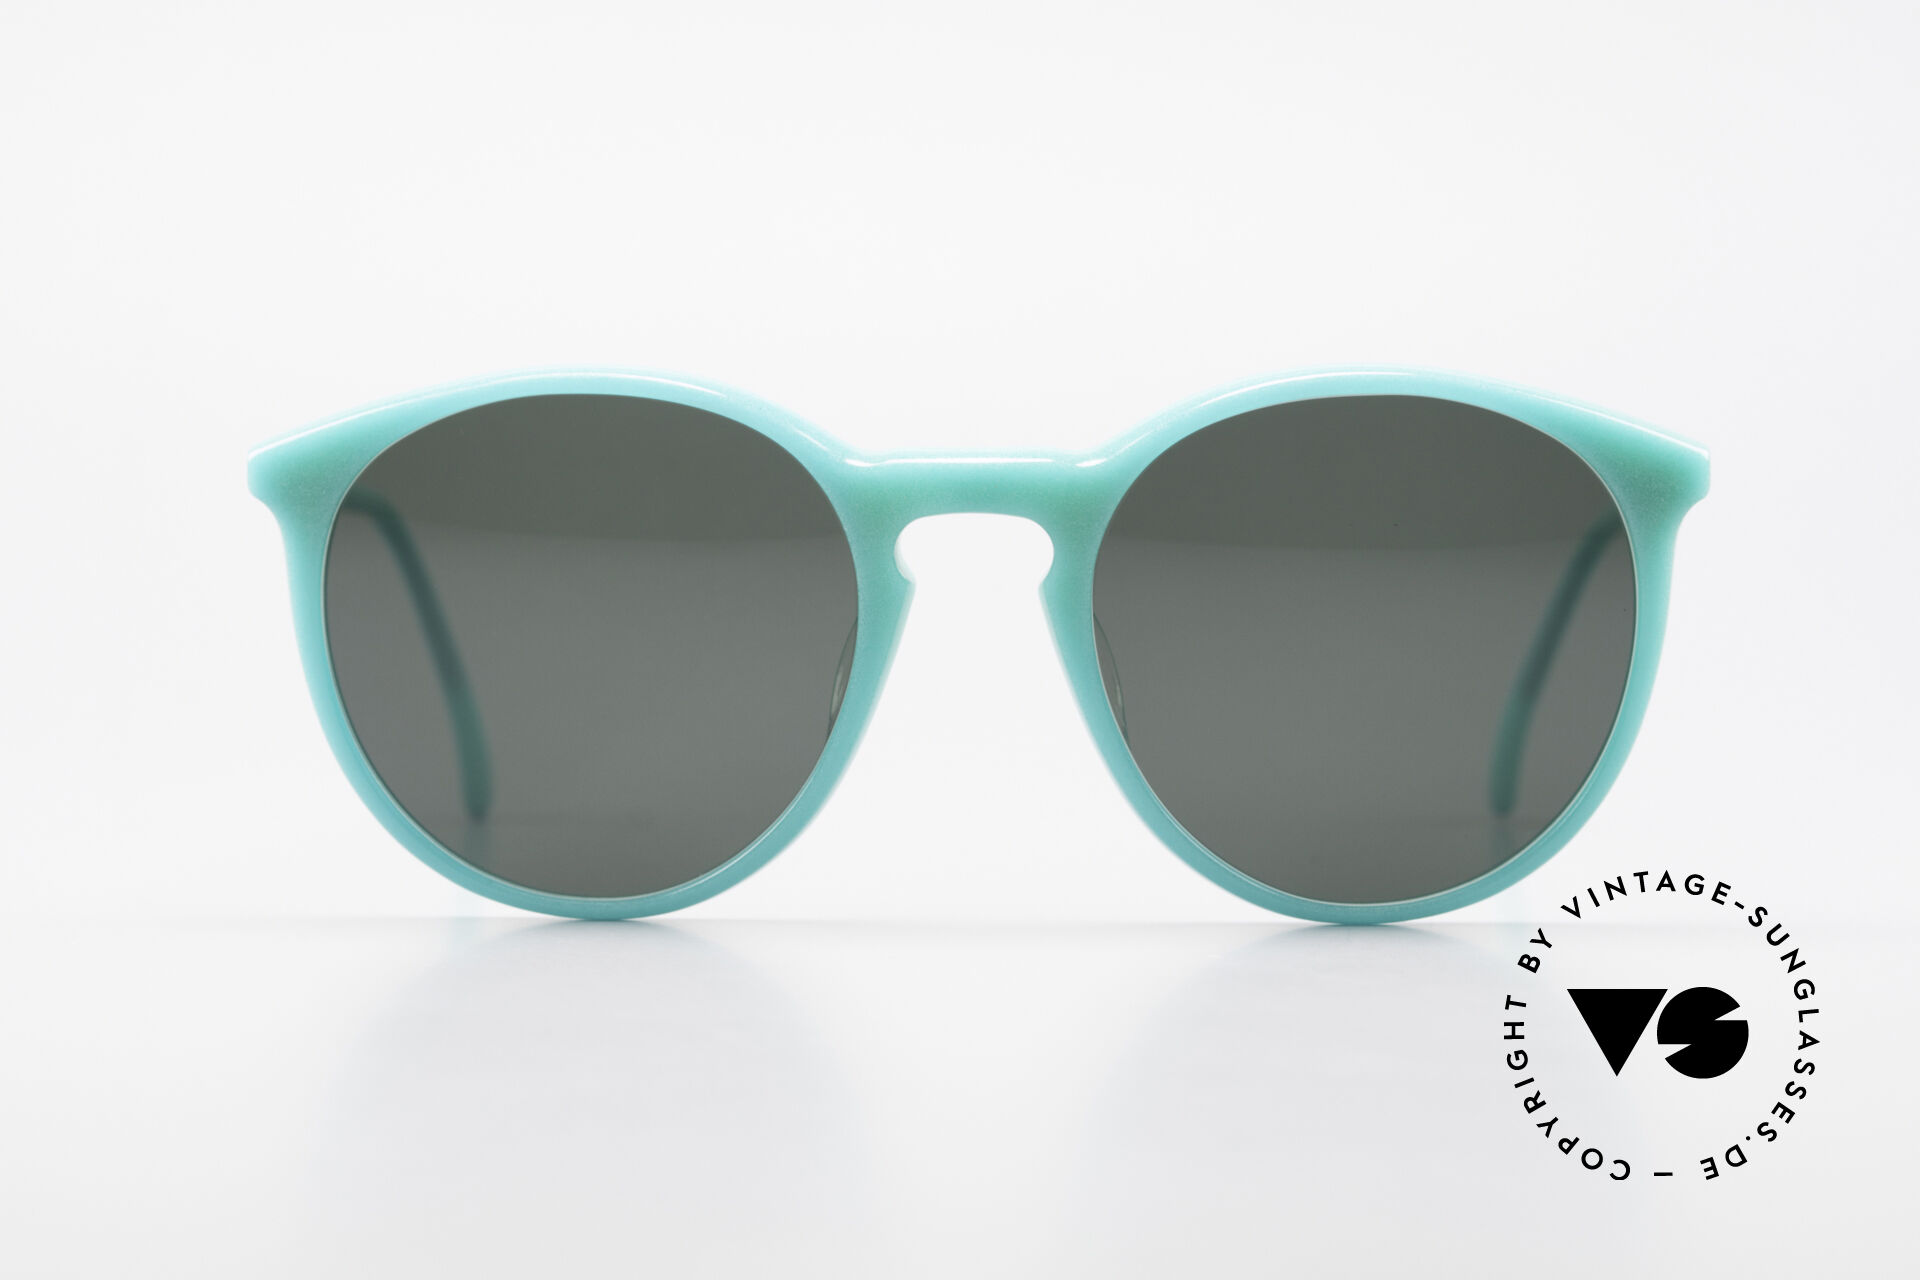 Sunglasses Alain Mikli 901 / 079 Green Pearl Panto Sunglasses